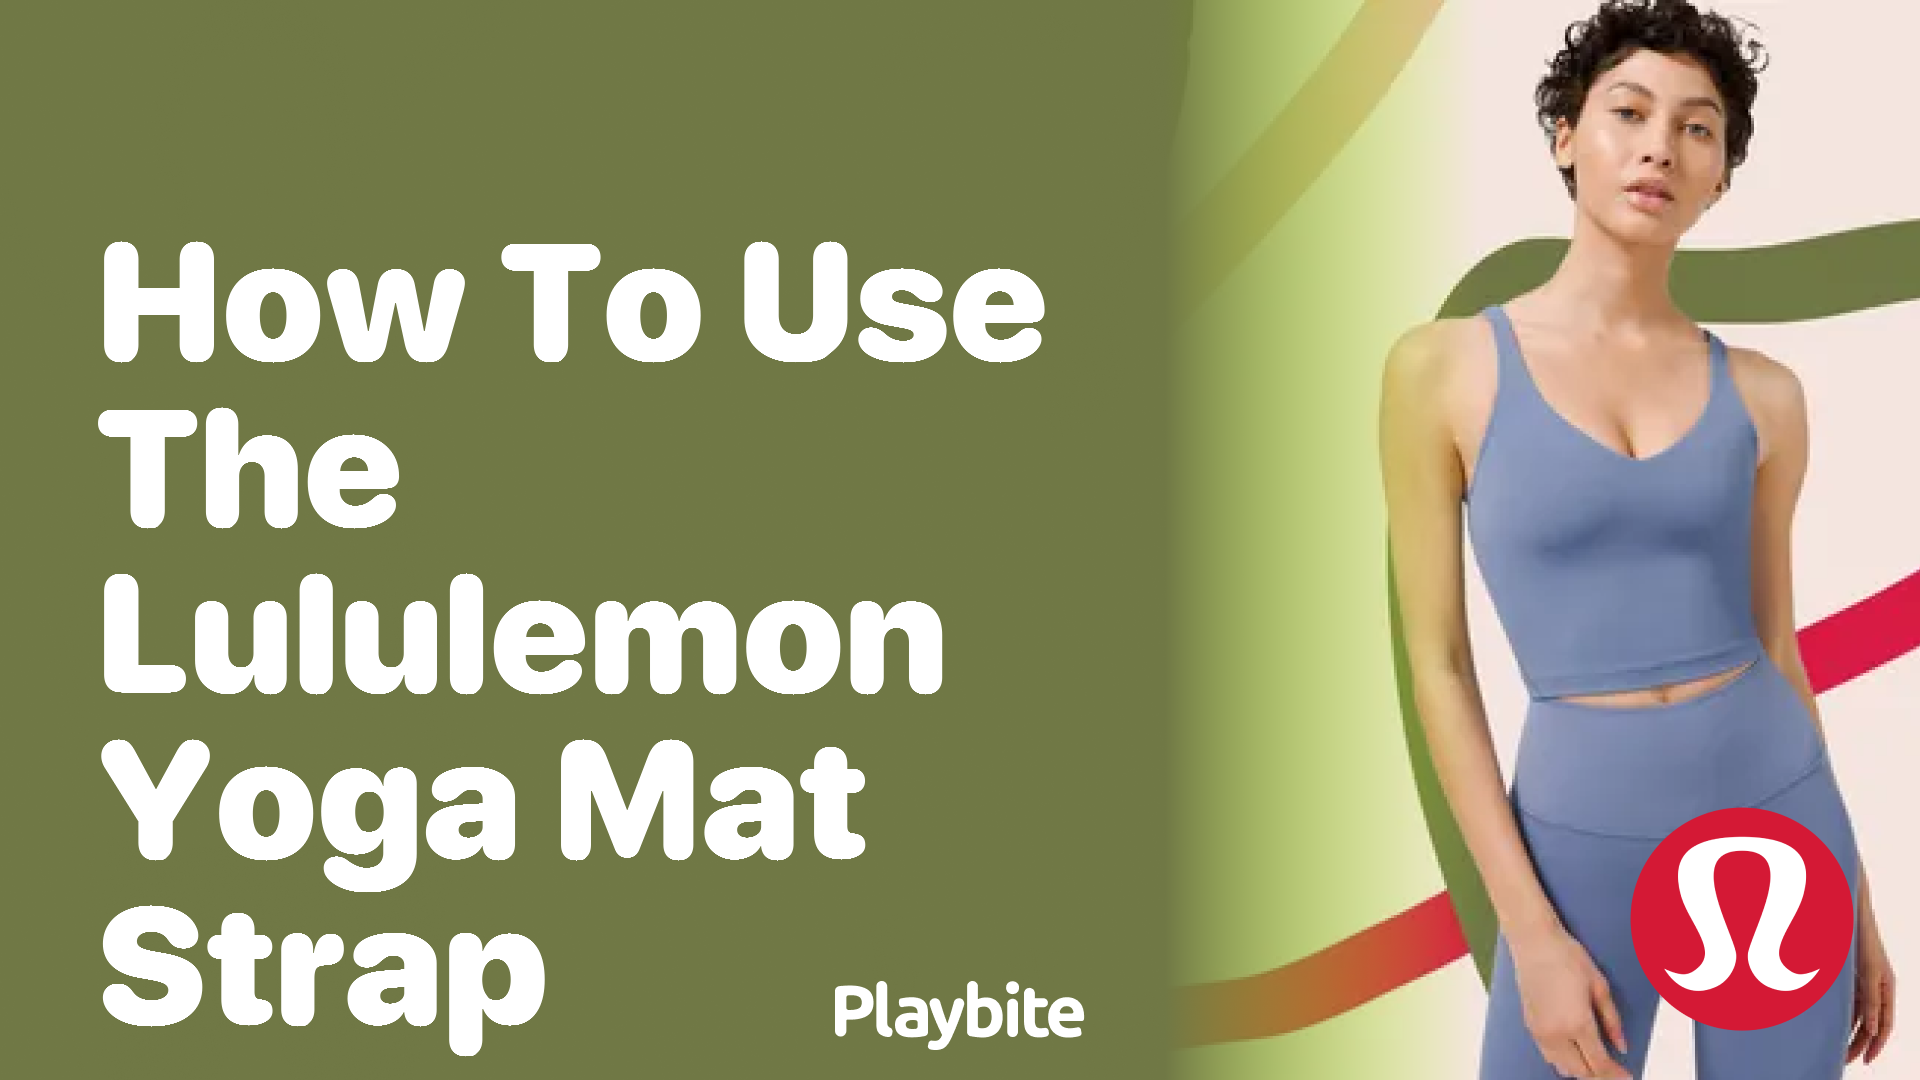 How to Use the Lululemon Yoga Mat Strap - Playbite